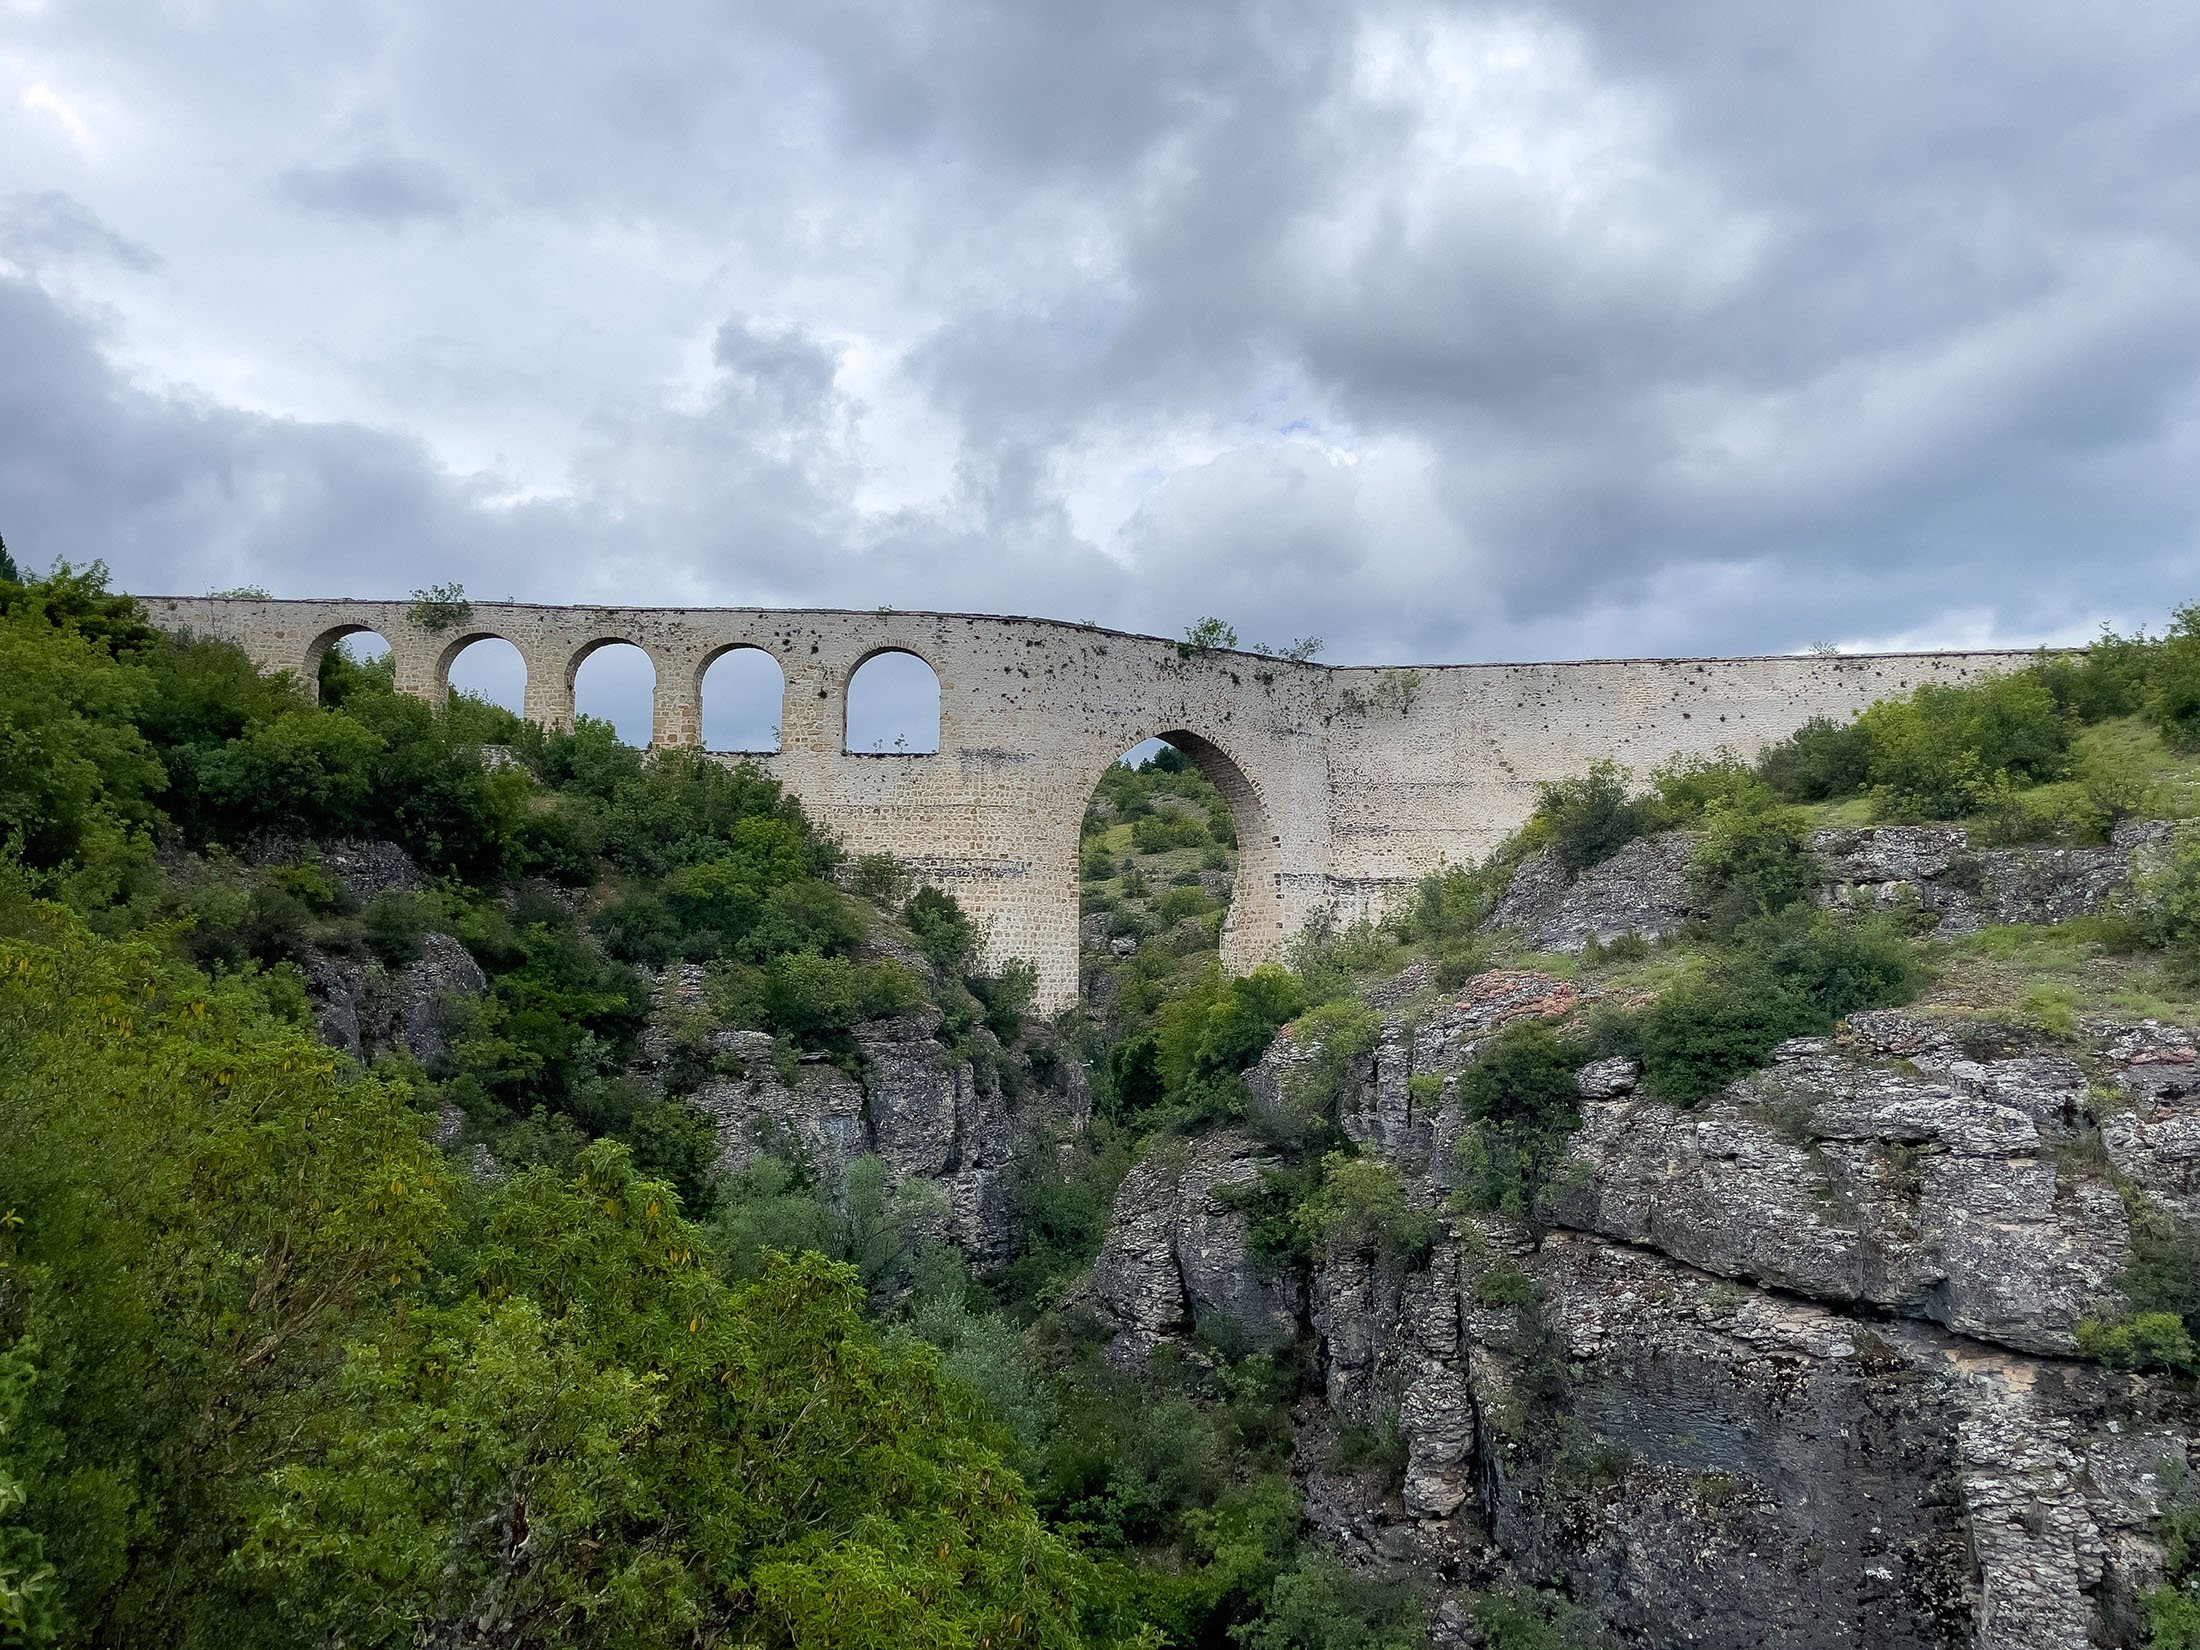 A historical aqueduct goes across the canyon in Safranbolu, Karabük, northern Turkey, July 10, 2022. (Photo by Ahmet Koçak)